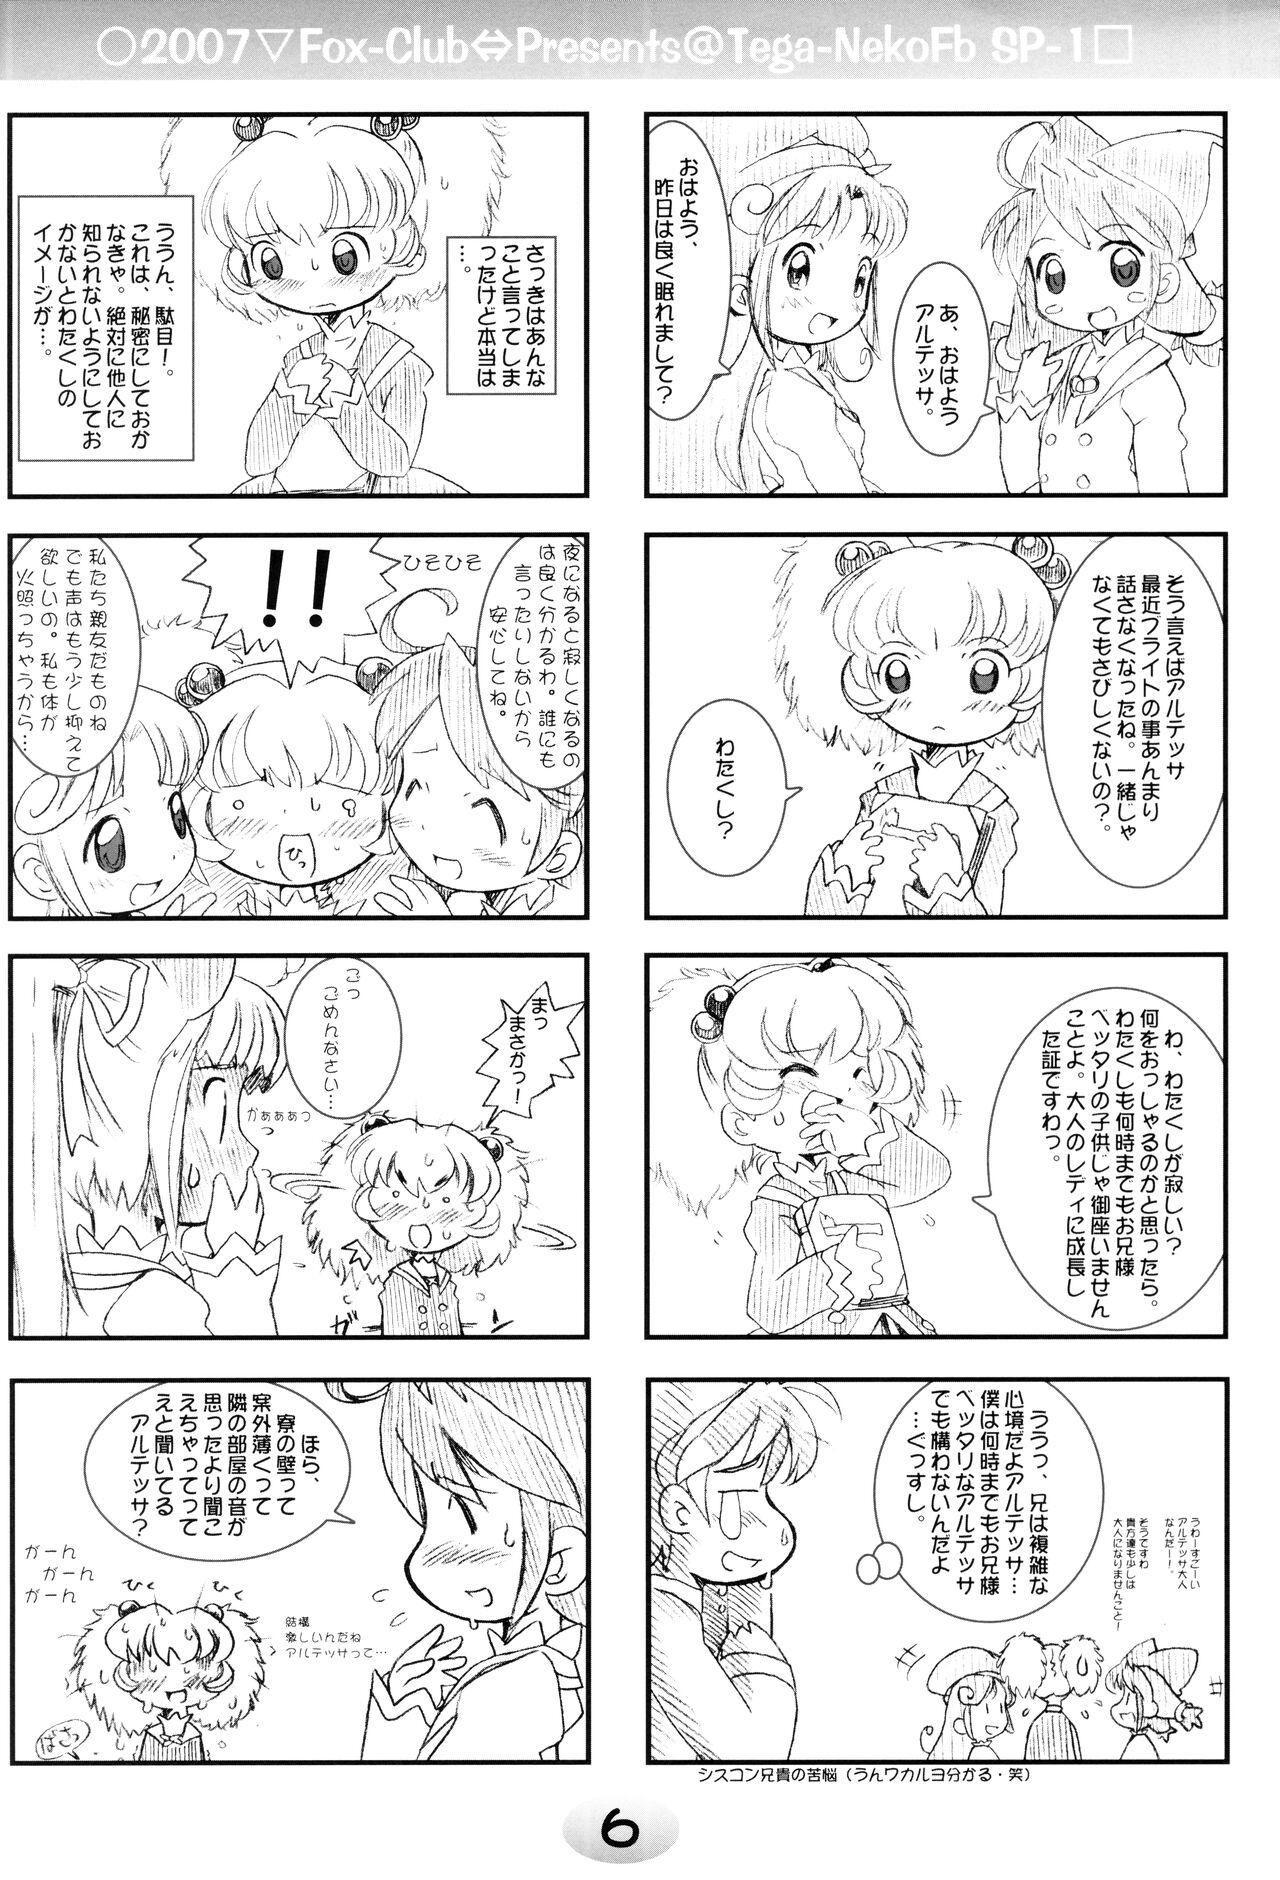 Hooker TeGa-NeKo Fb/SP Futago Hime Plus - Fushigiboshi no futagohime | twin princesses of the wonder planet Jeans - Page 4